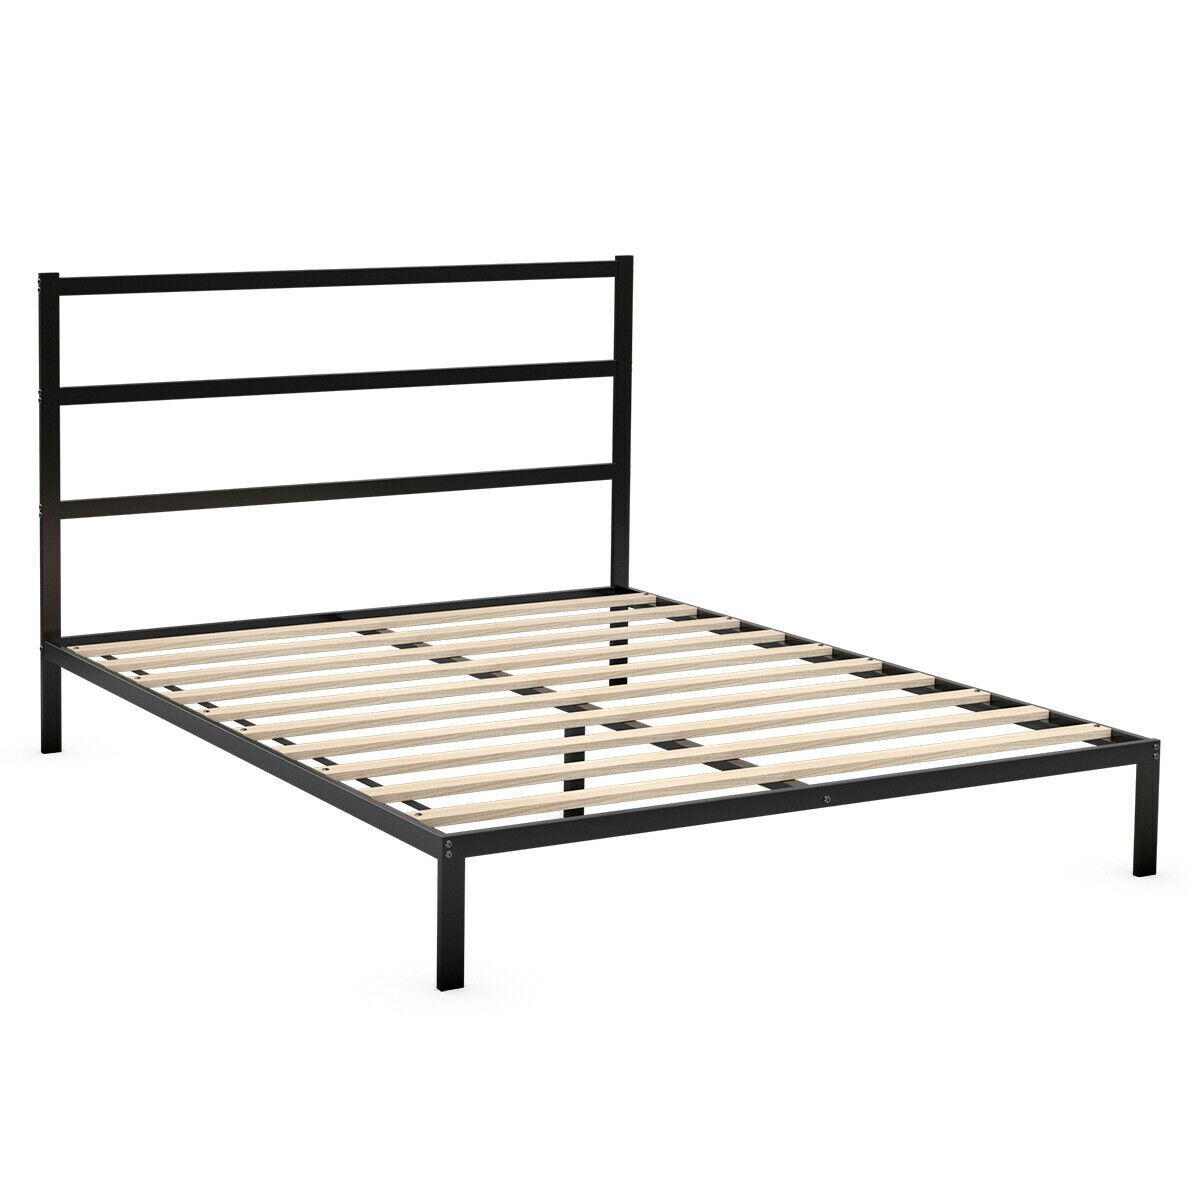 Costway Queen Size Metal Bed Platform, Intellibase Bed Frame